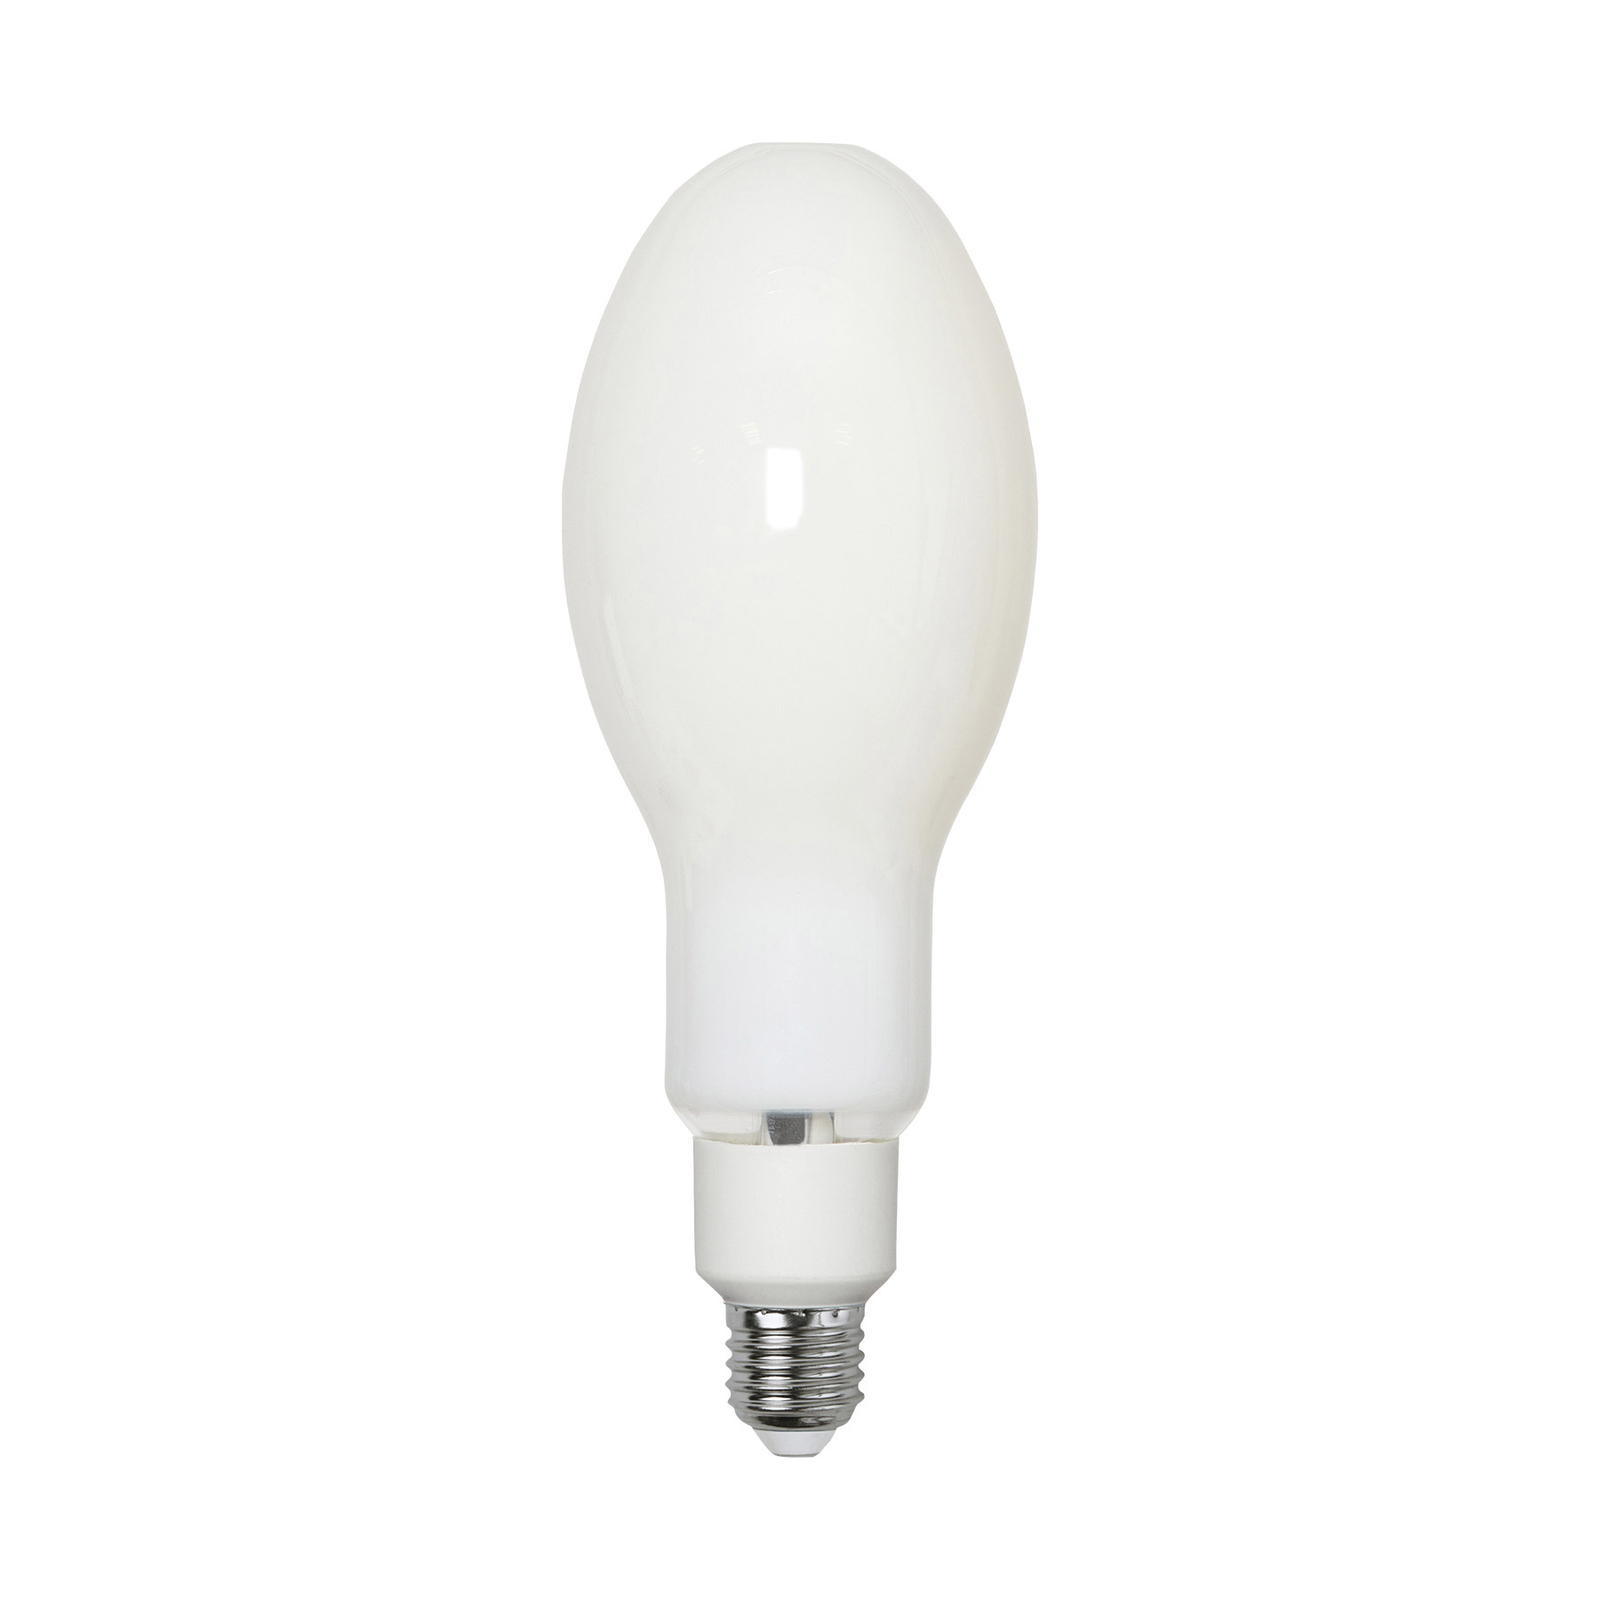 LED bulb E27 26 W 6,500 K 4,000 lumens